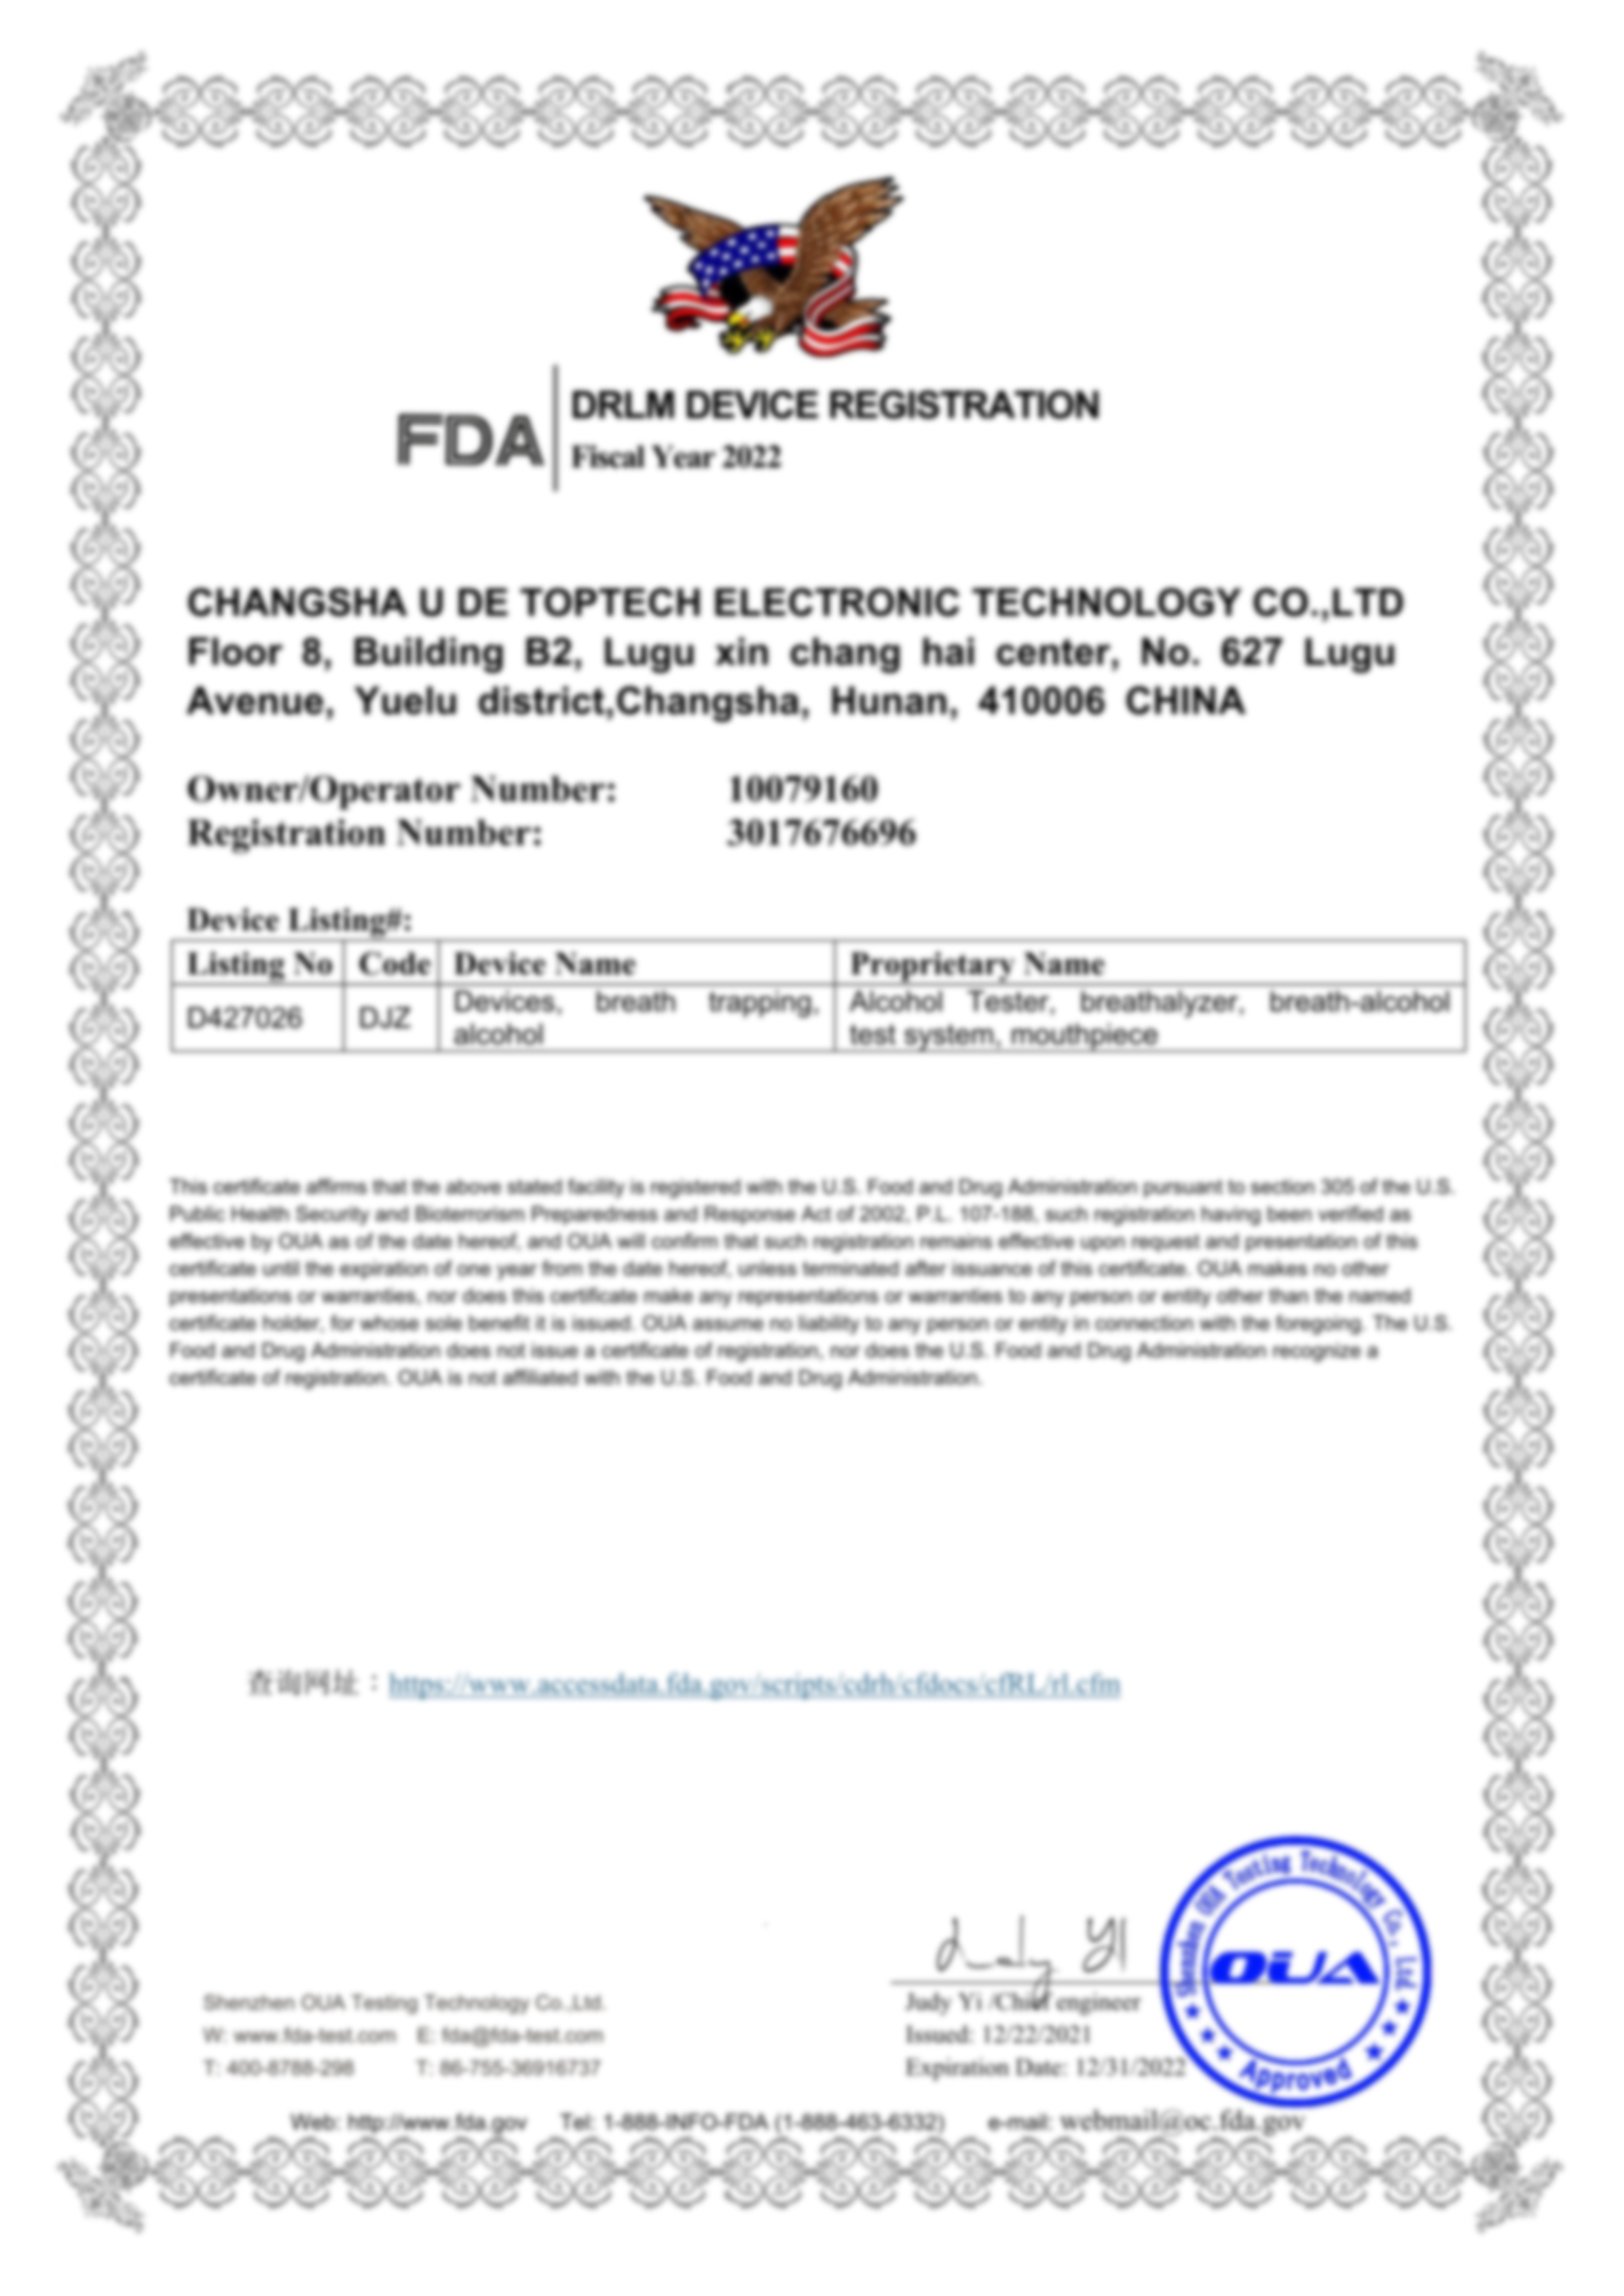 Changsha Youde Zhuorui Electronic Technology Co., Ltd._FDA registration certificate